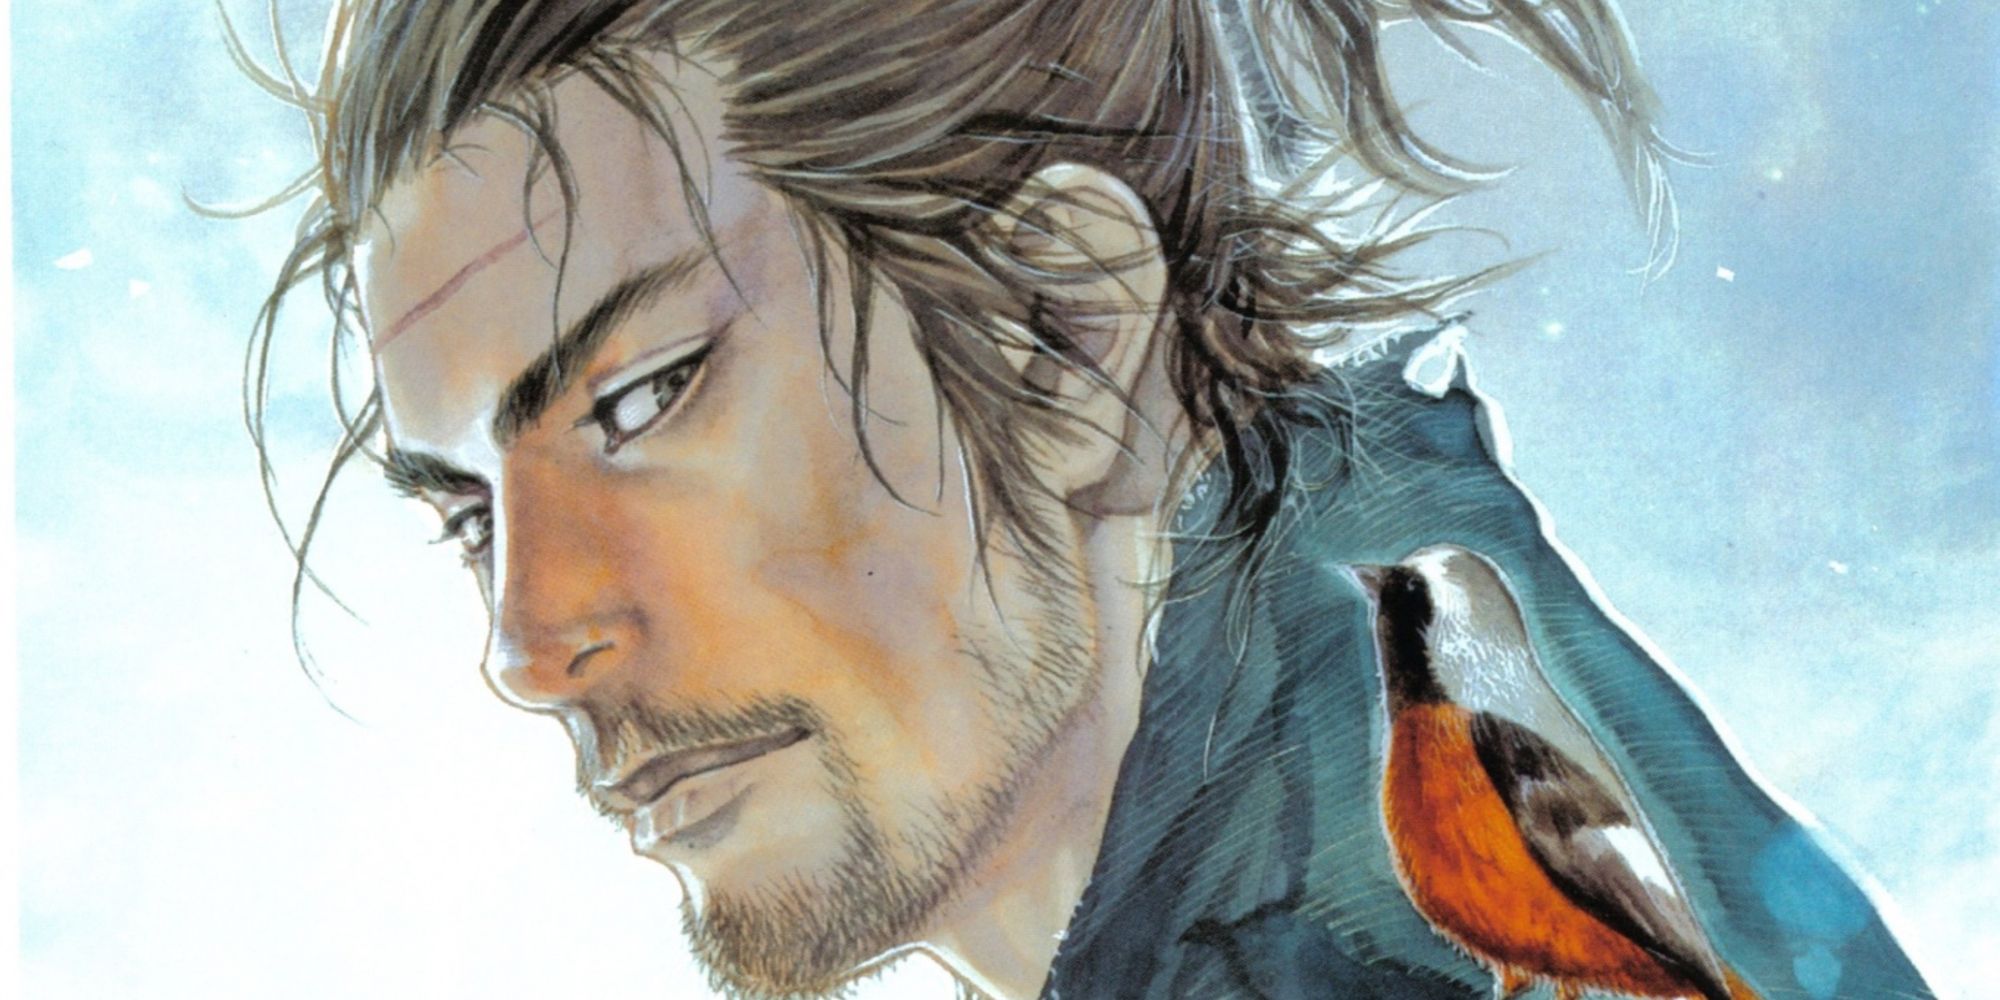 A finch perches itself upon Musashi